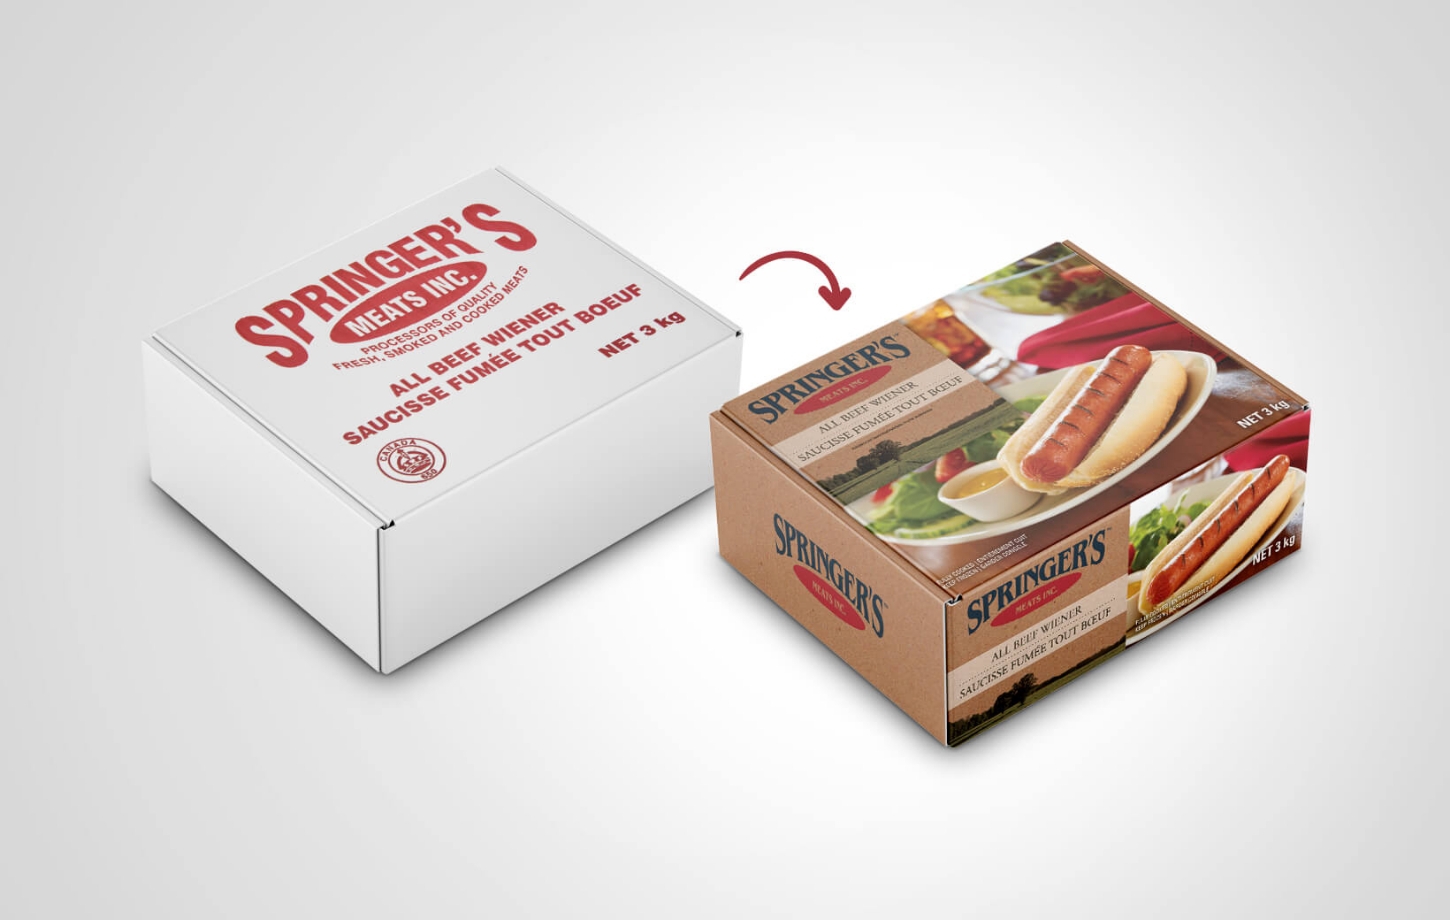 Springers packaging design comparison